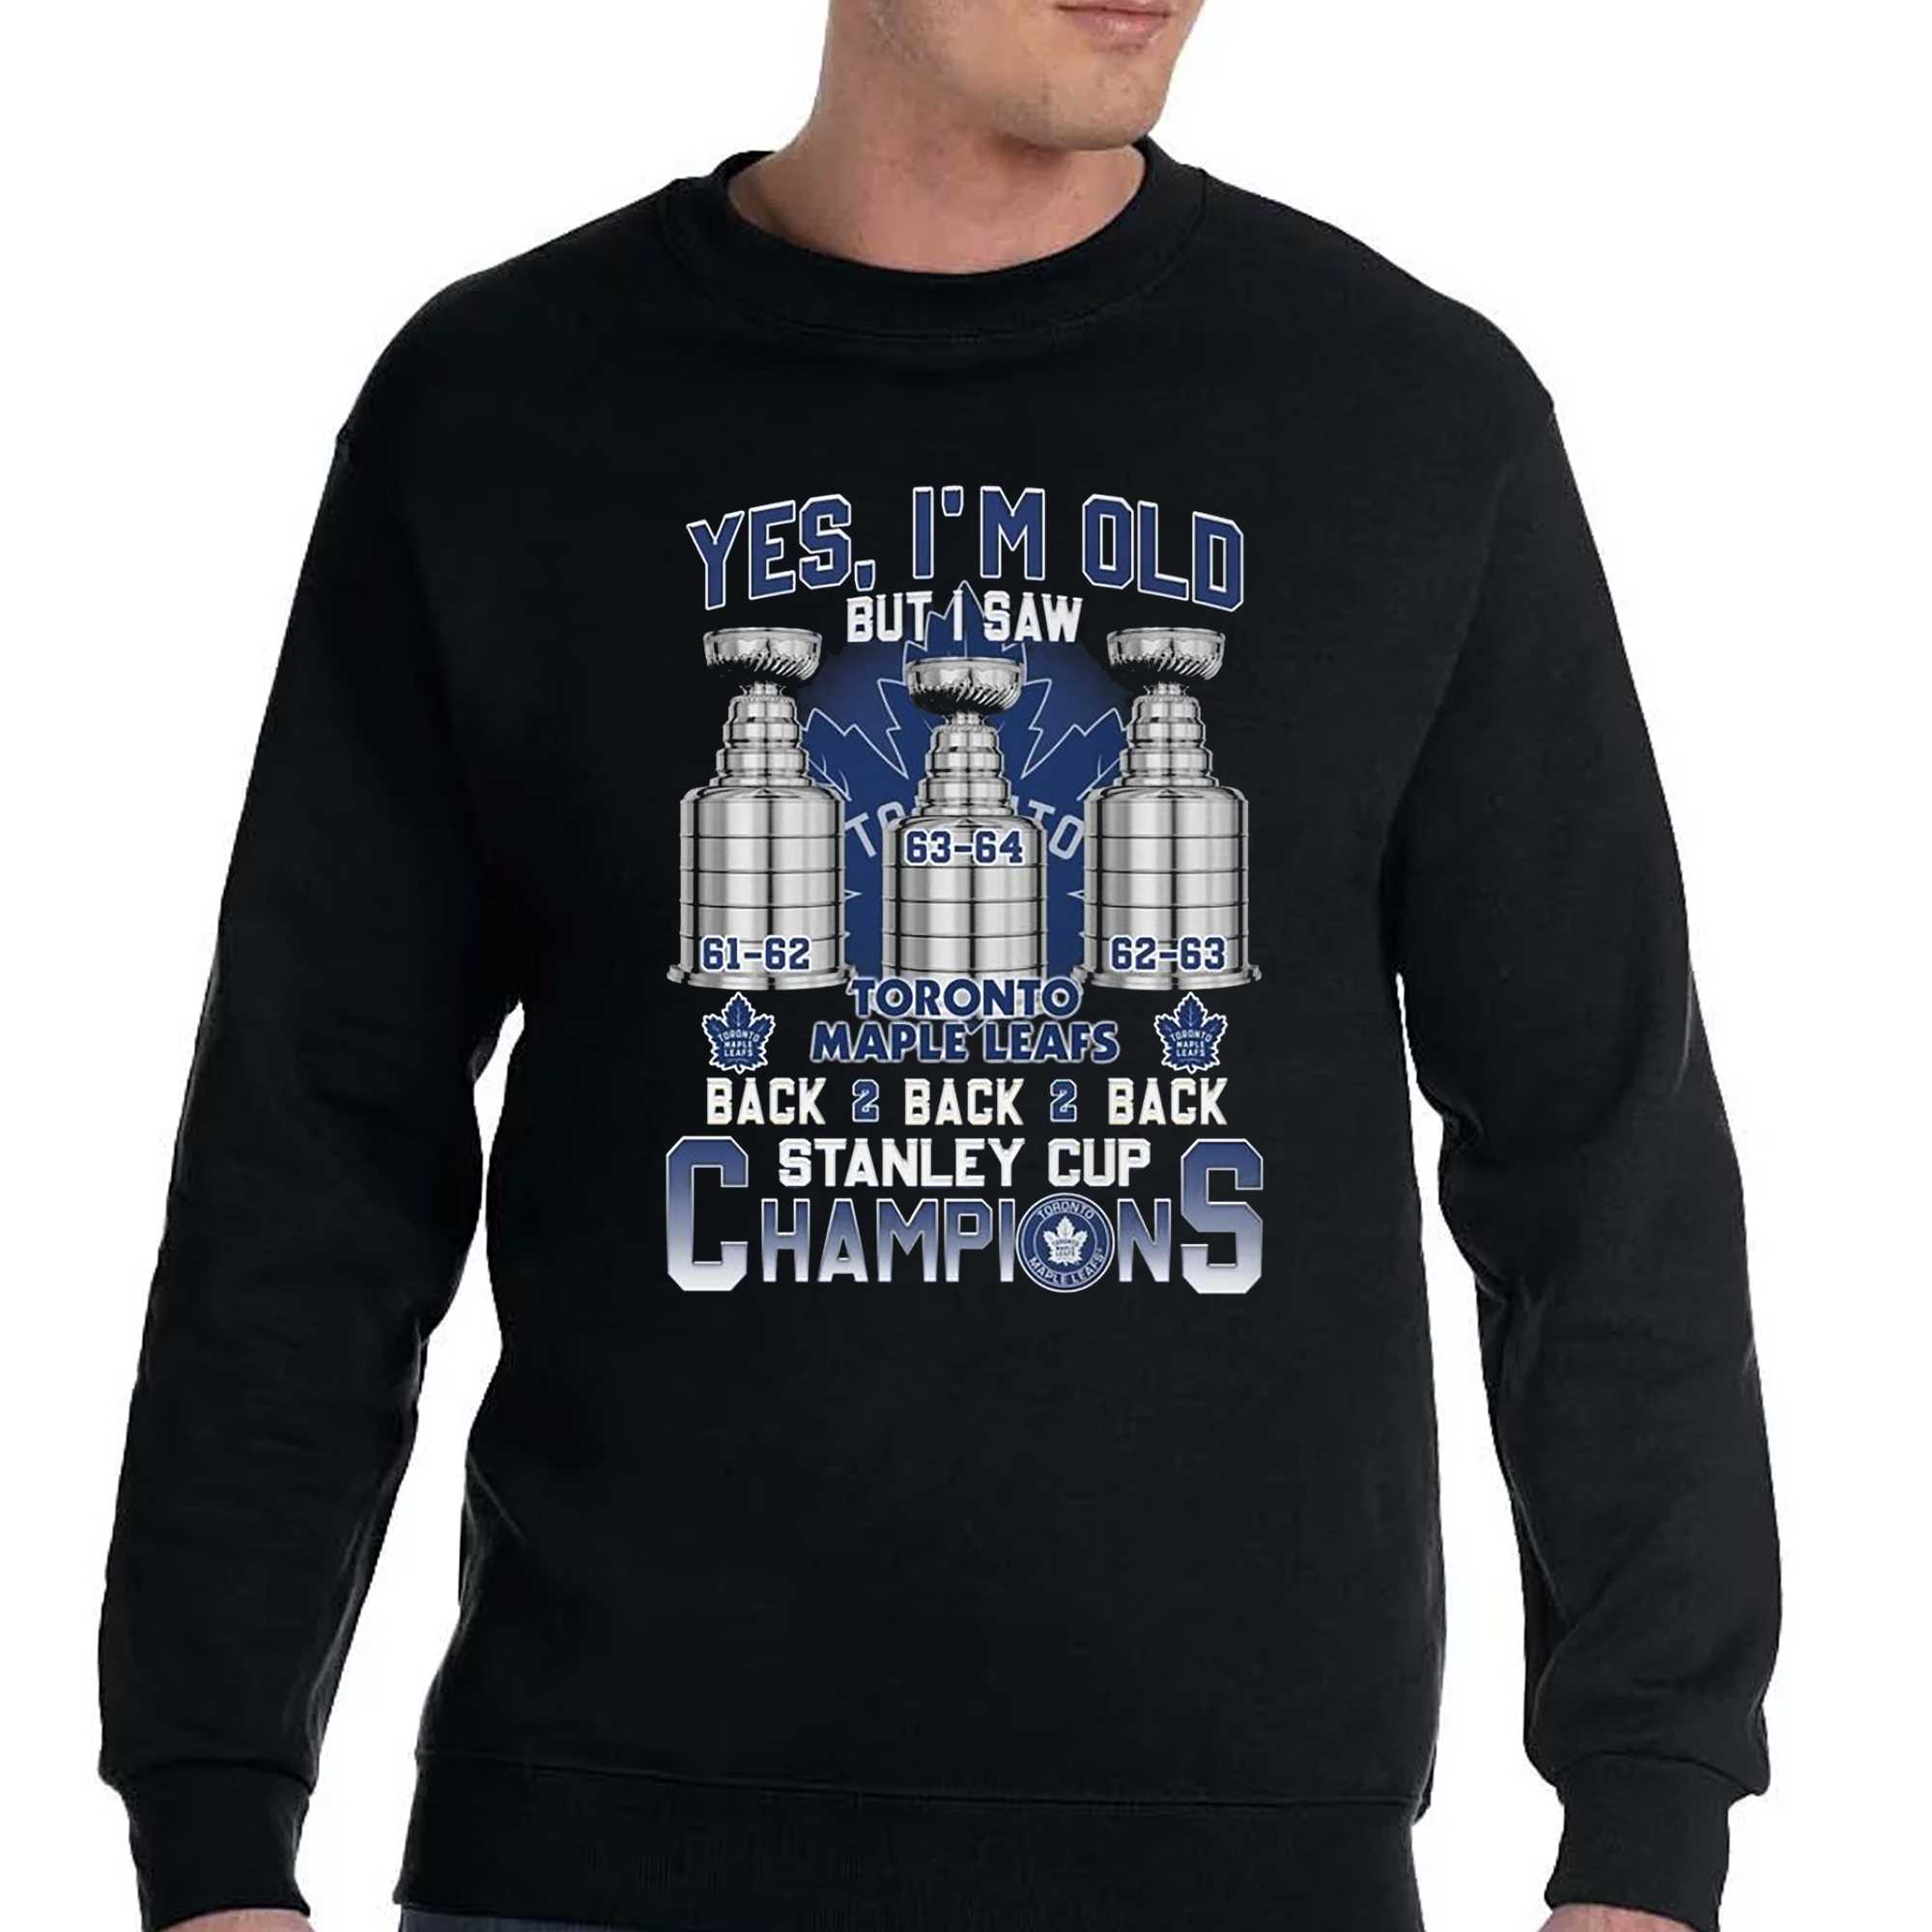 Toronto Maple Leafs Unisex Unisex Cabin Crew Neck Sweater